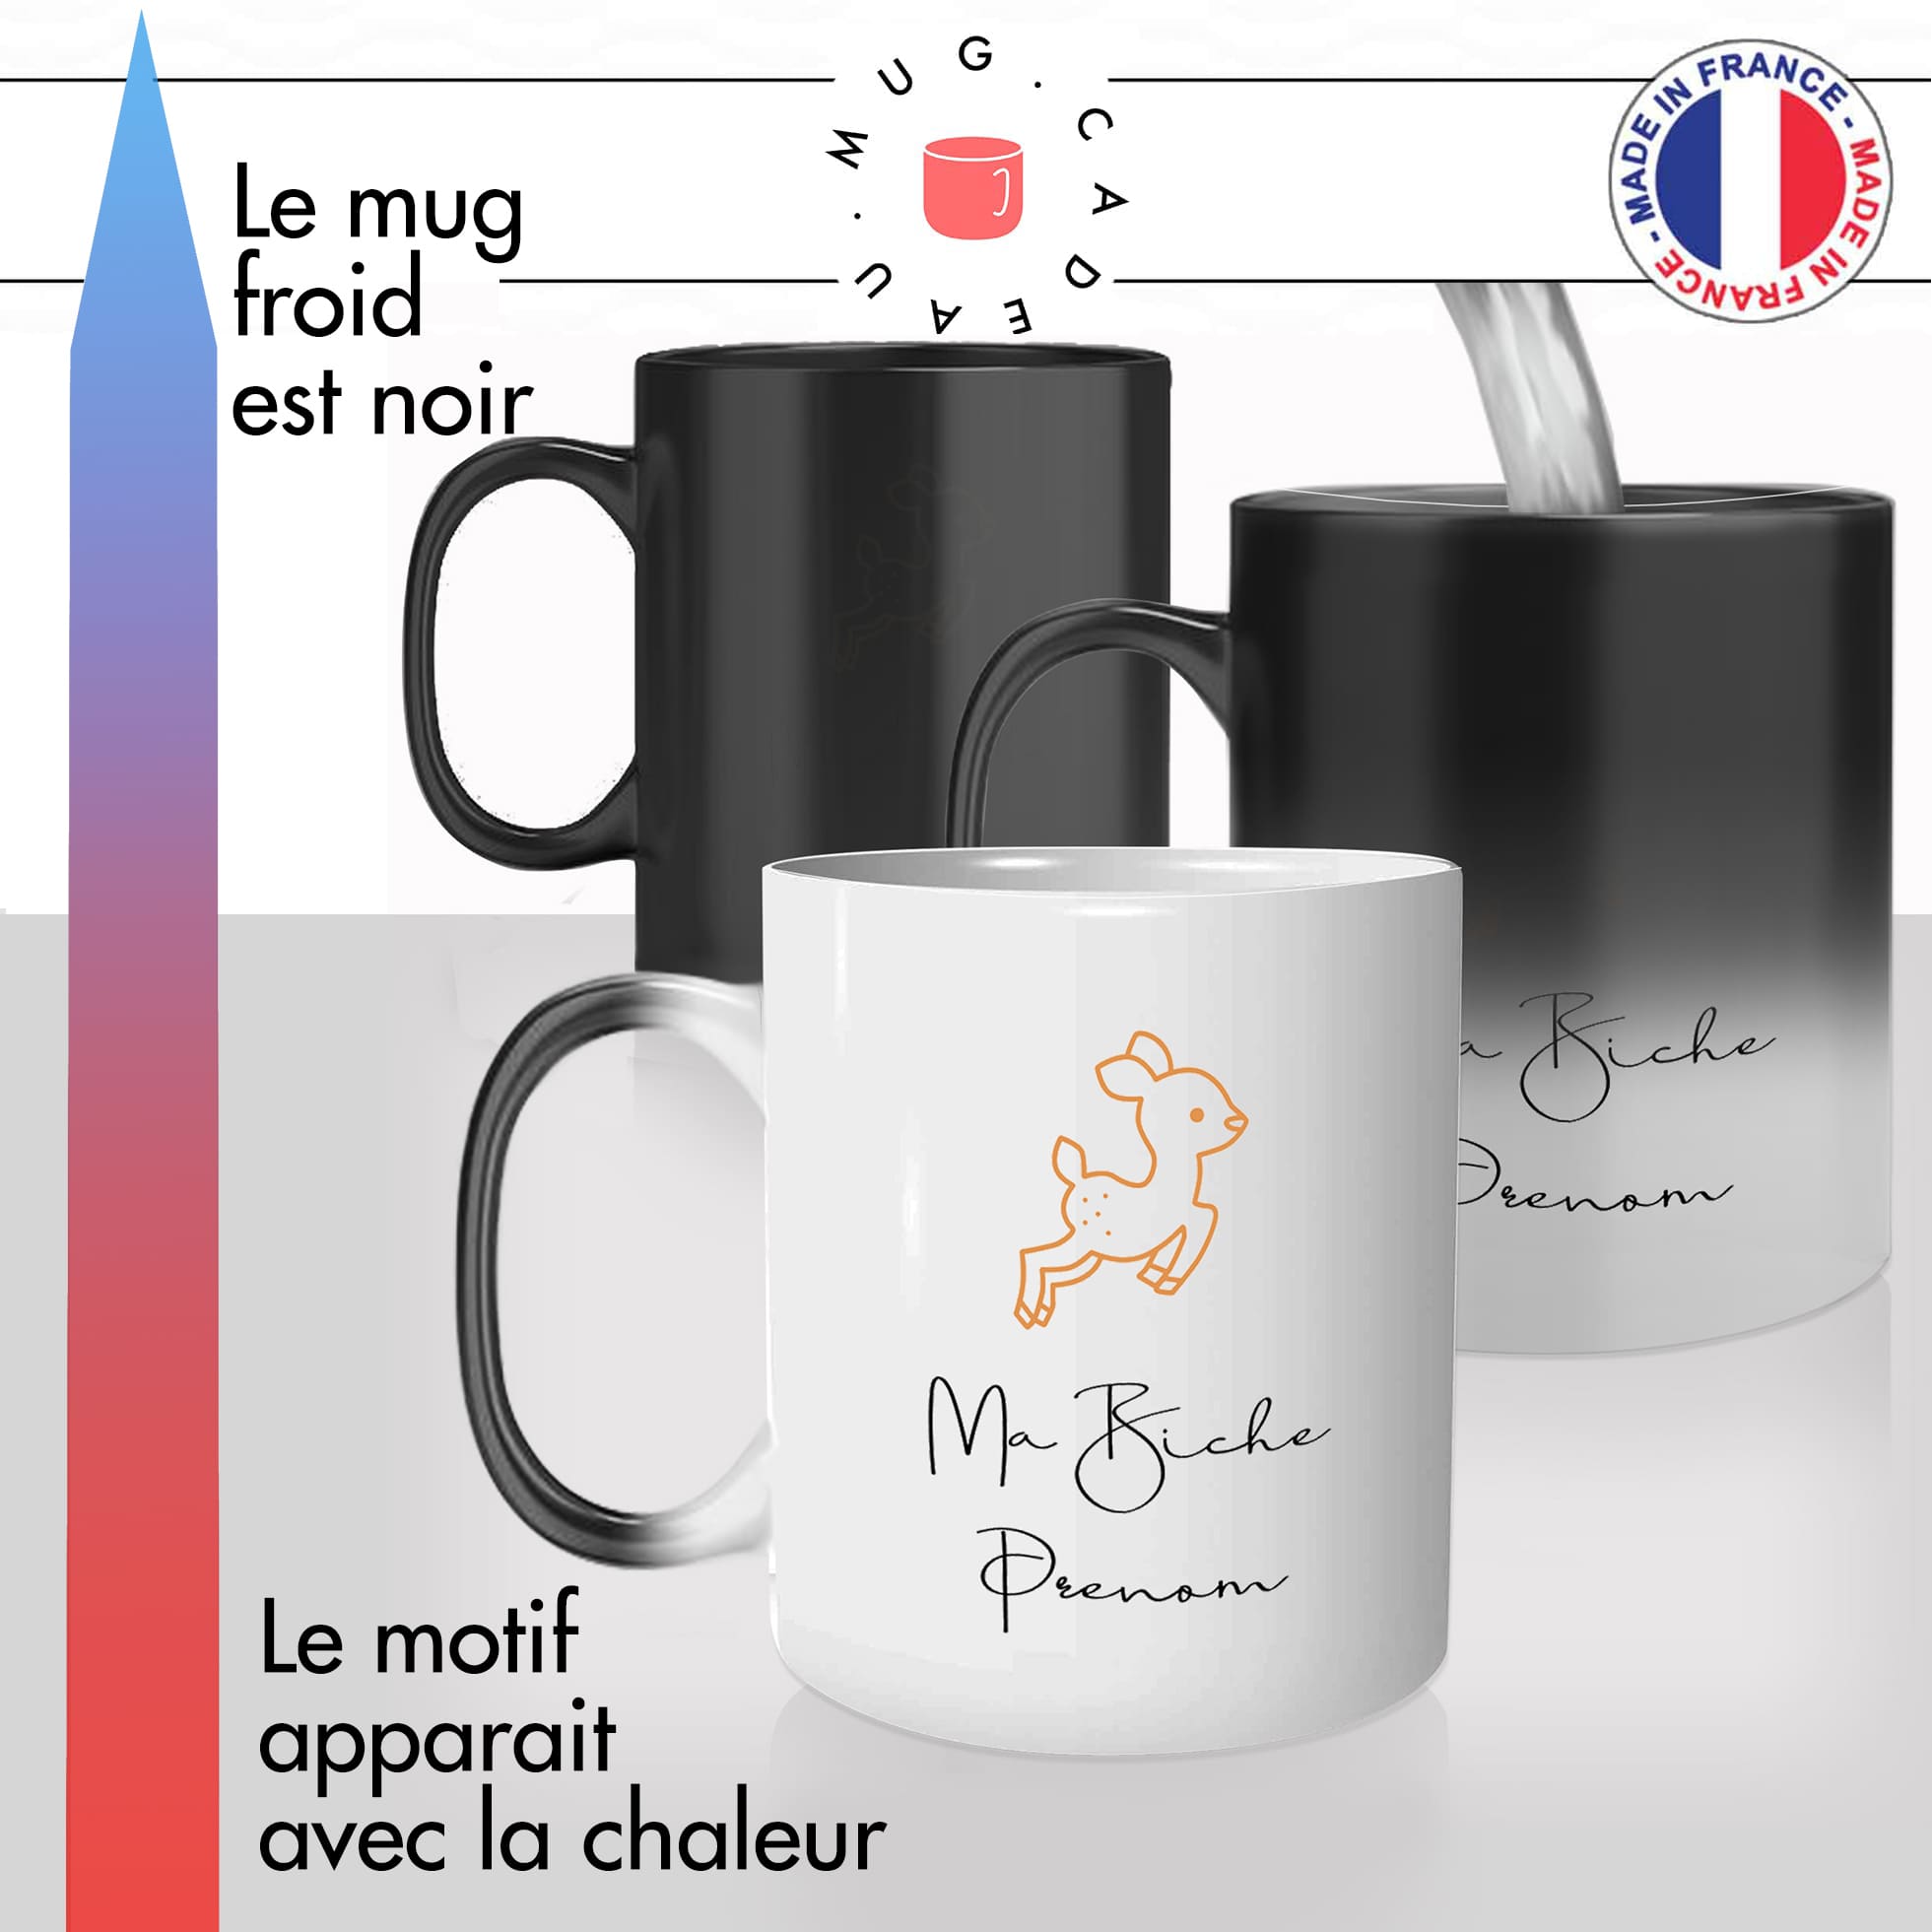 mug magique ma biche bichette prenom personnalisable idée cadeau tasse thermochauffante thermo reactif surprise